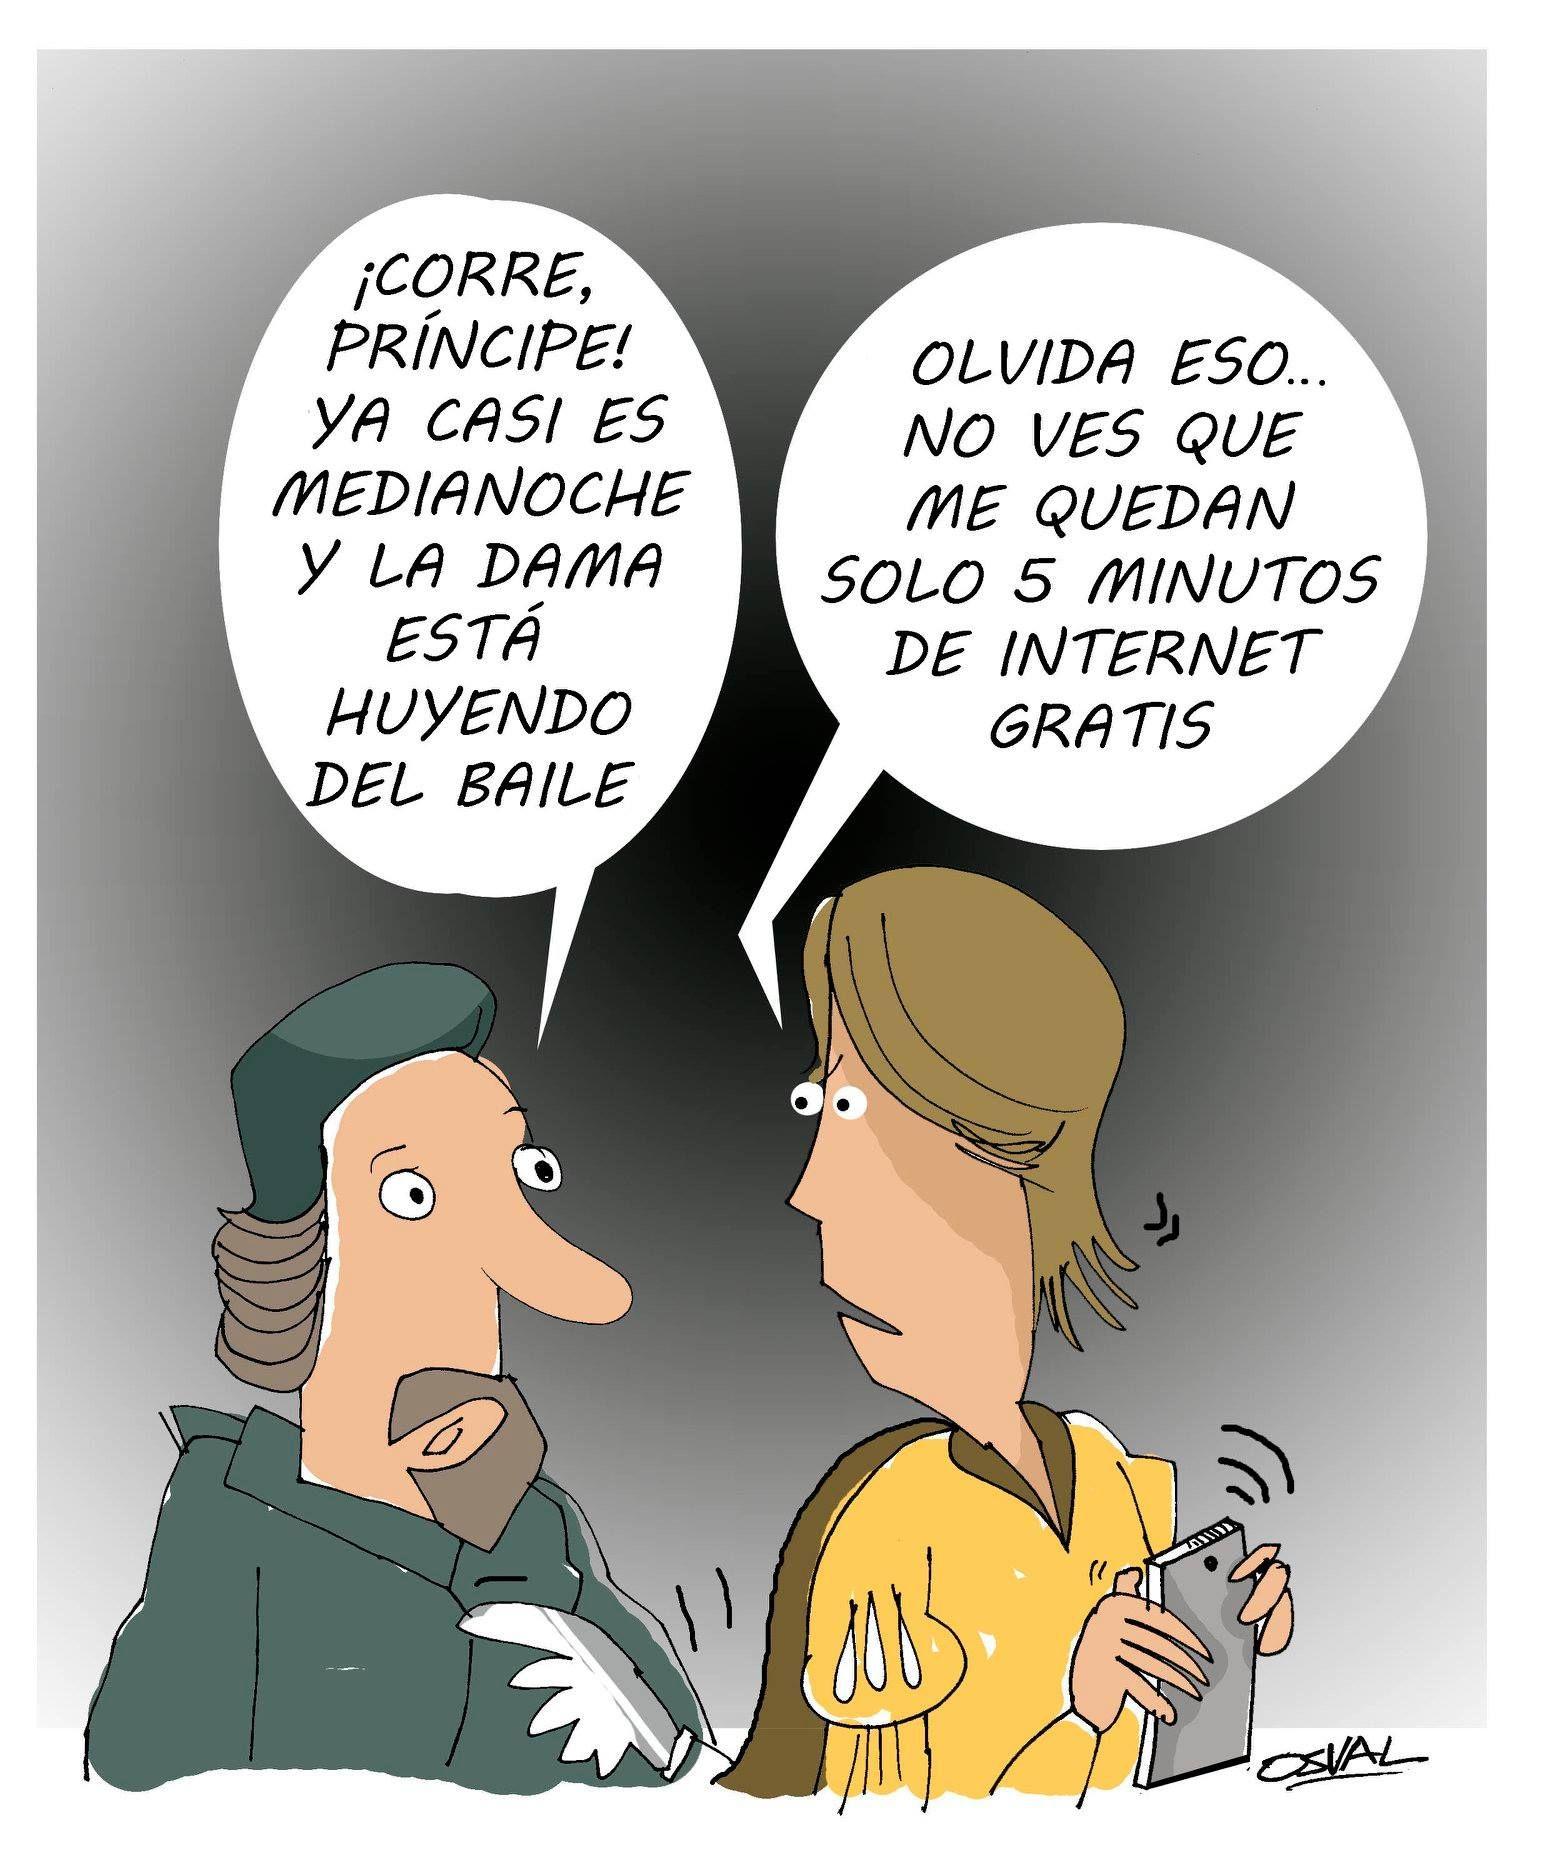 Caricatura: Osvaldo Gutiérrez (Osval) Tomada de su perfil en la red social Facebook